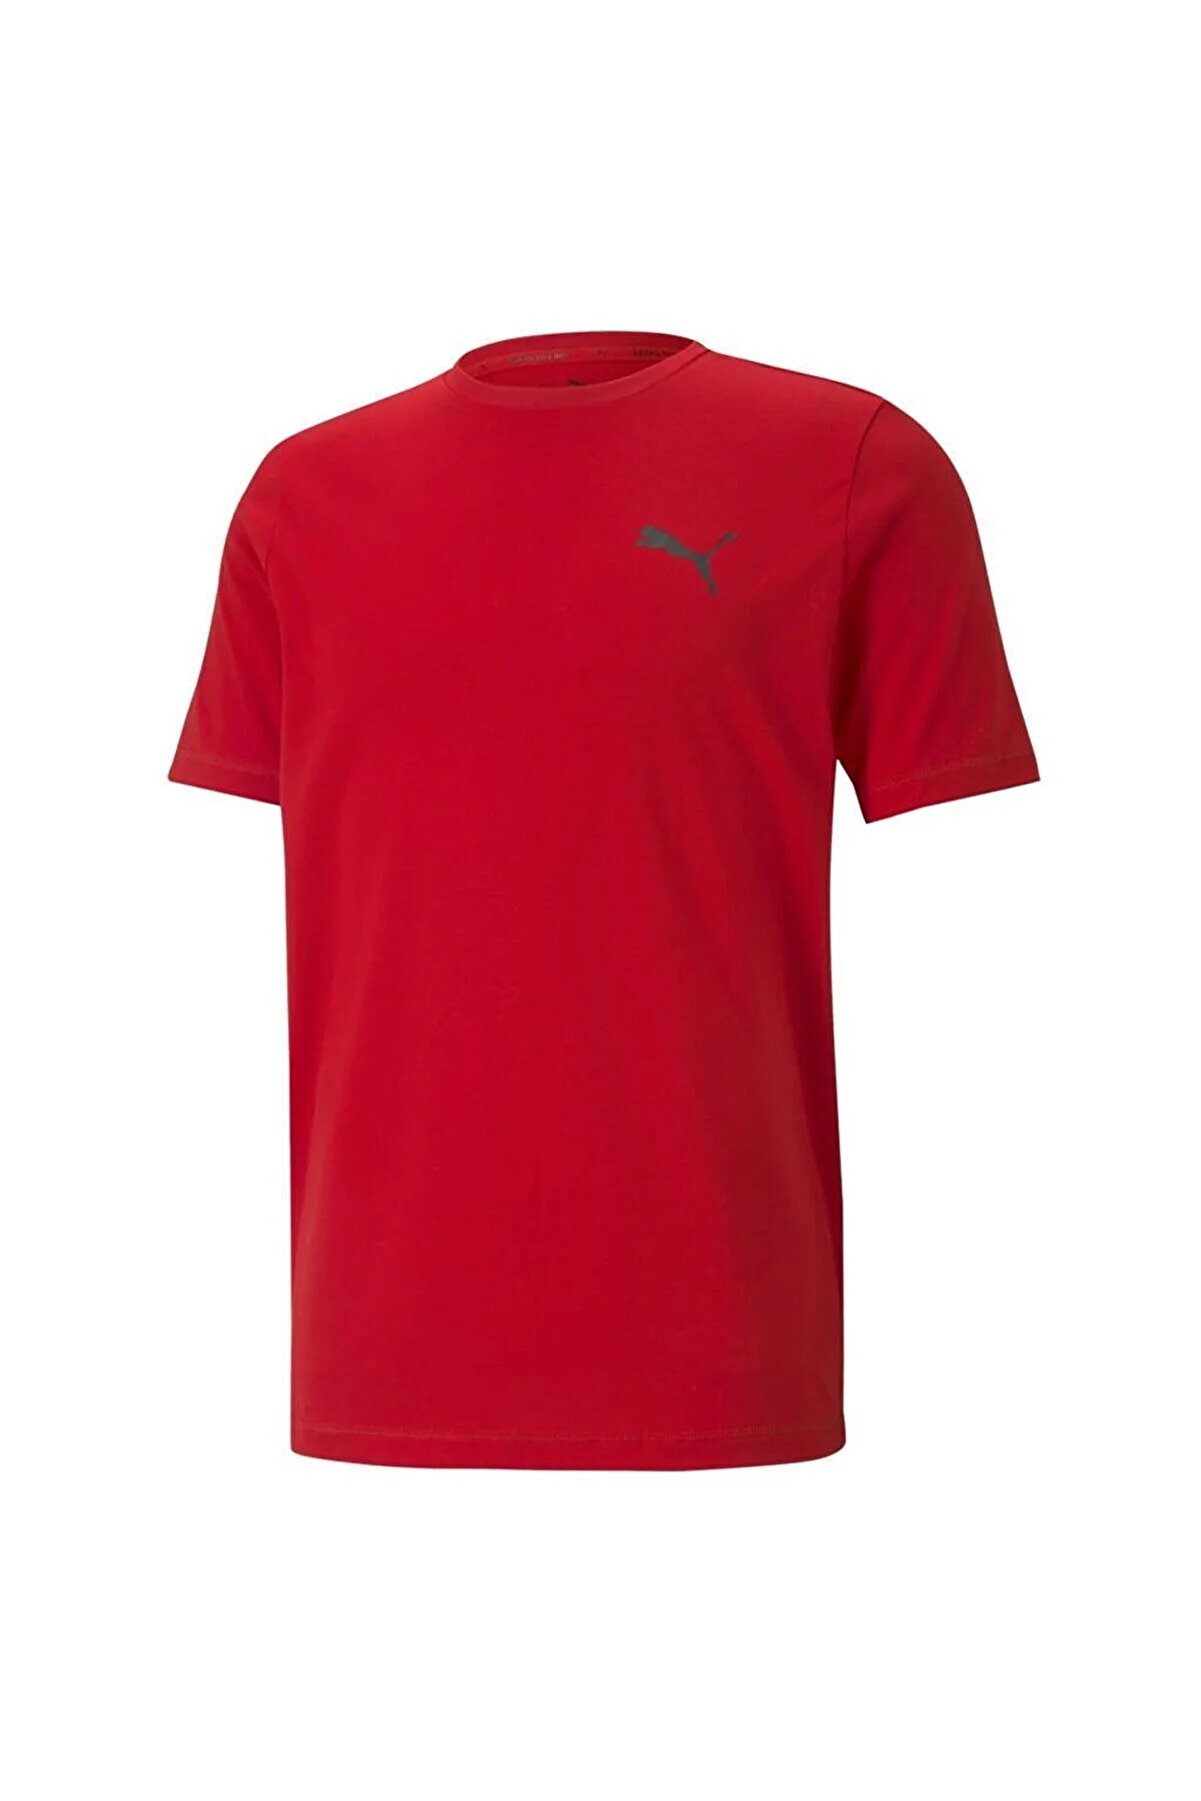 Puma Active Small Logo Tee - Erkek Kırmızı T-Shirt